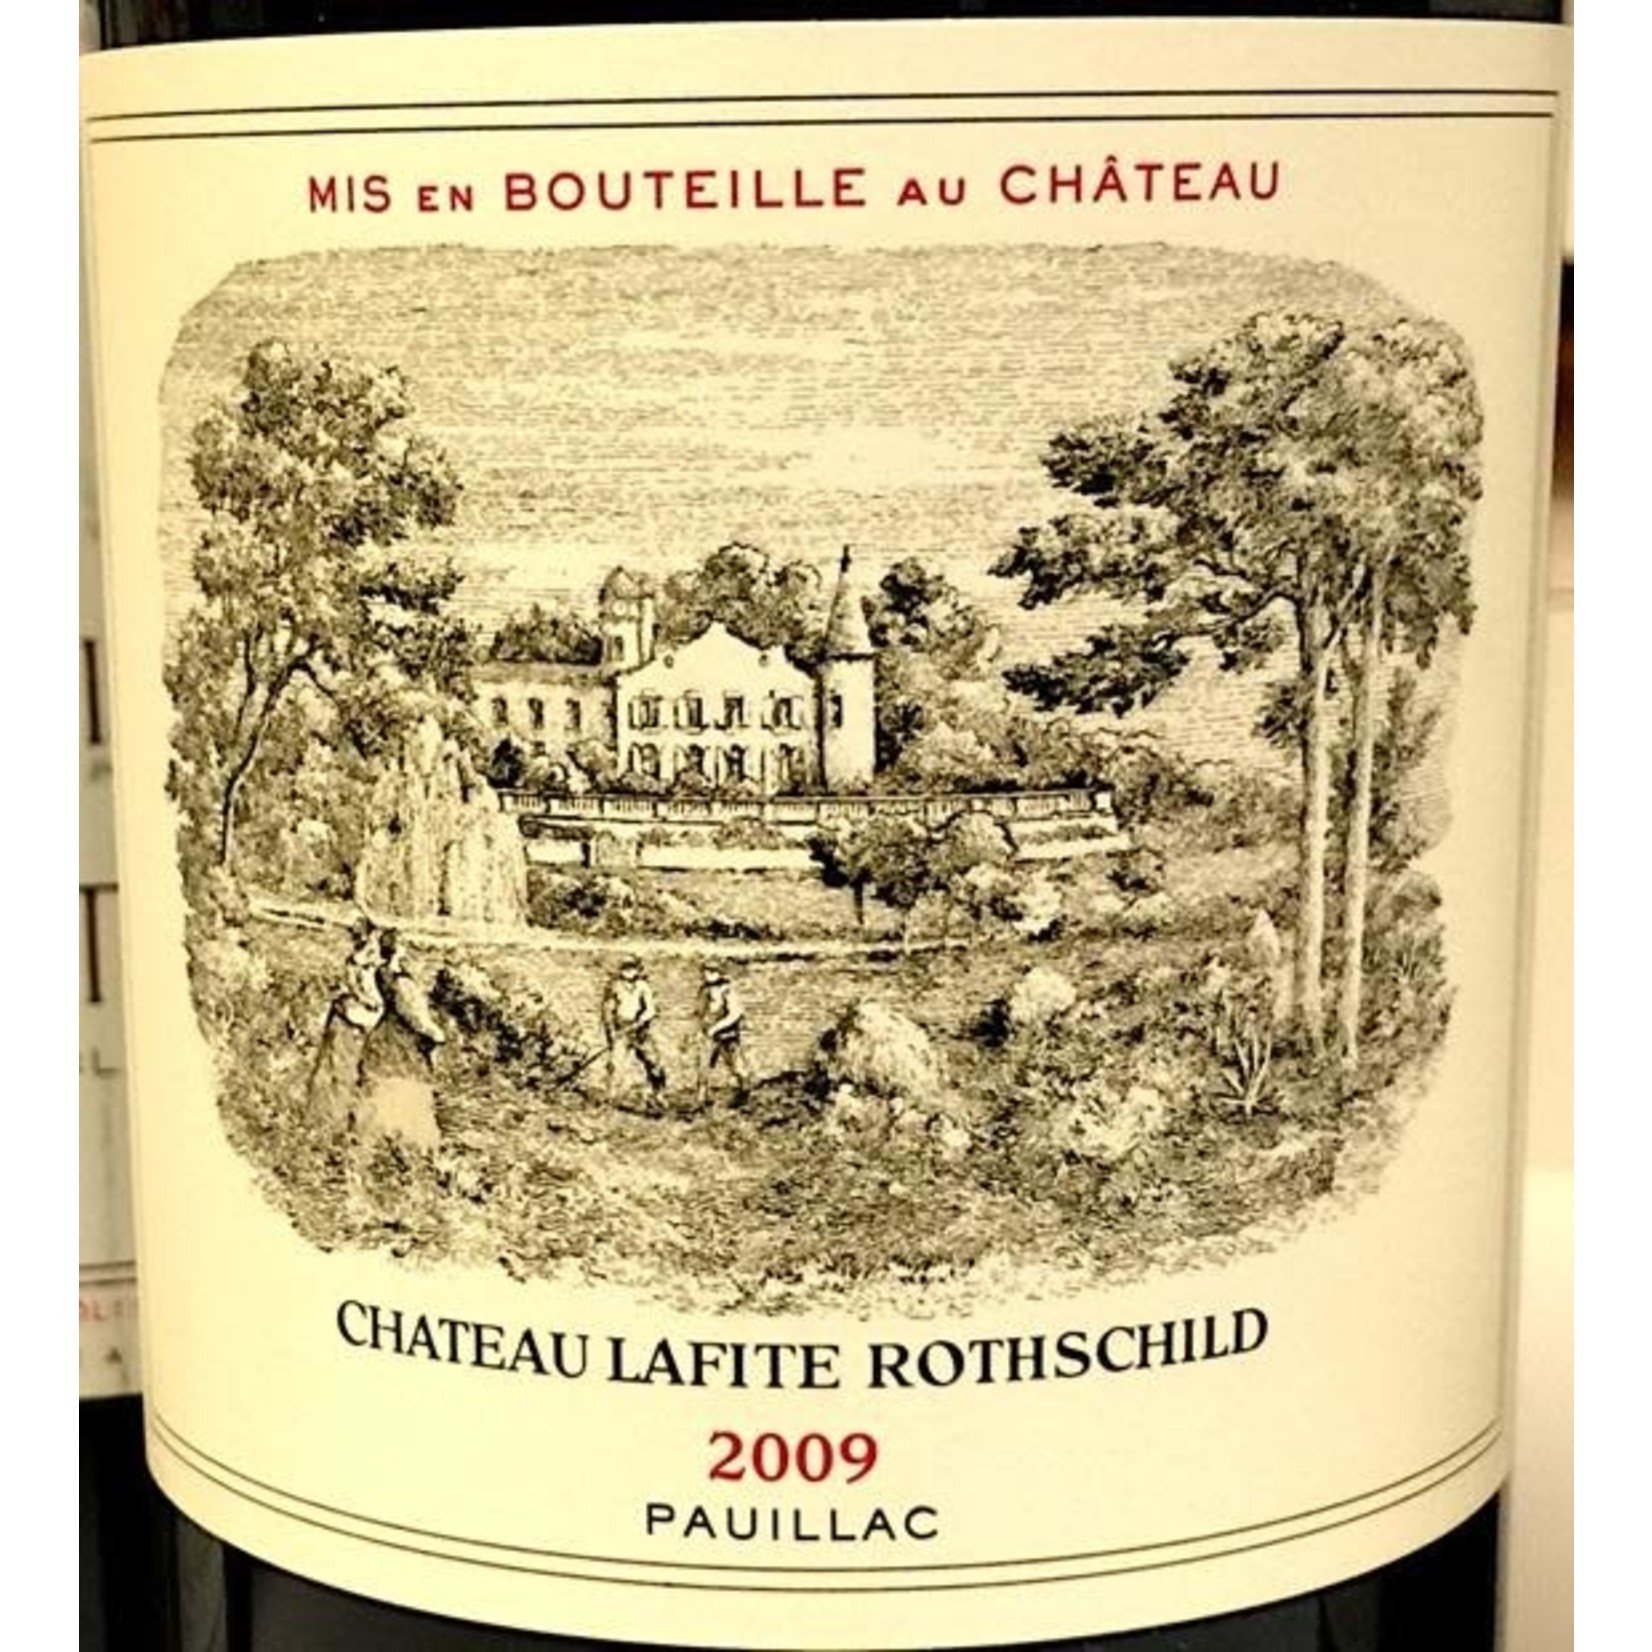 Wine Chateau Lafite Rothschild Pauillac 2009